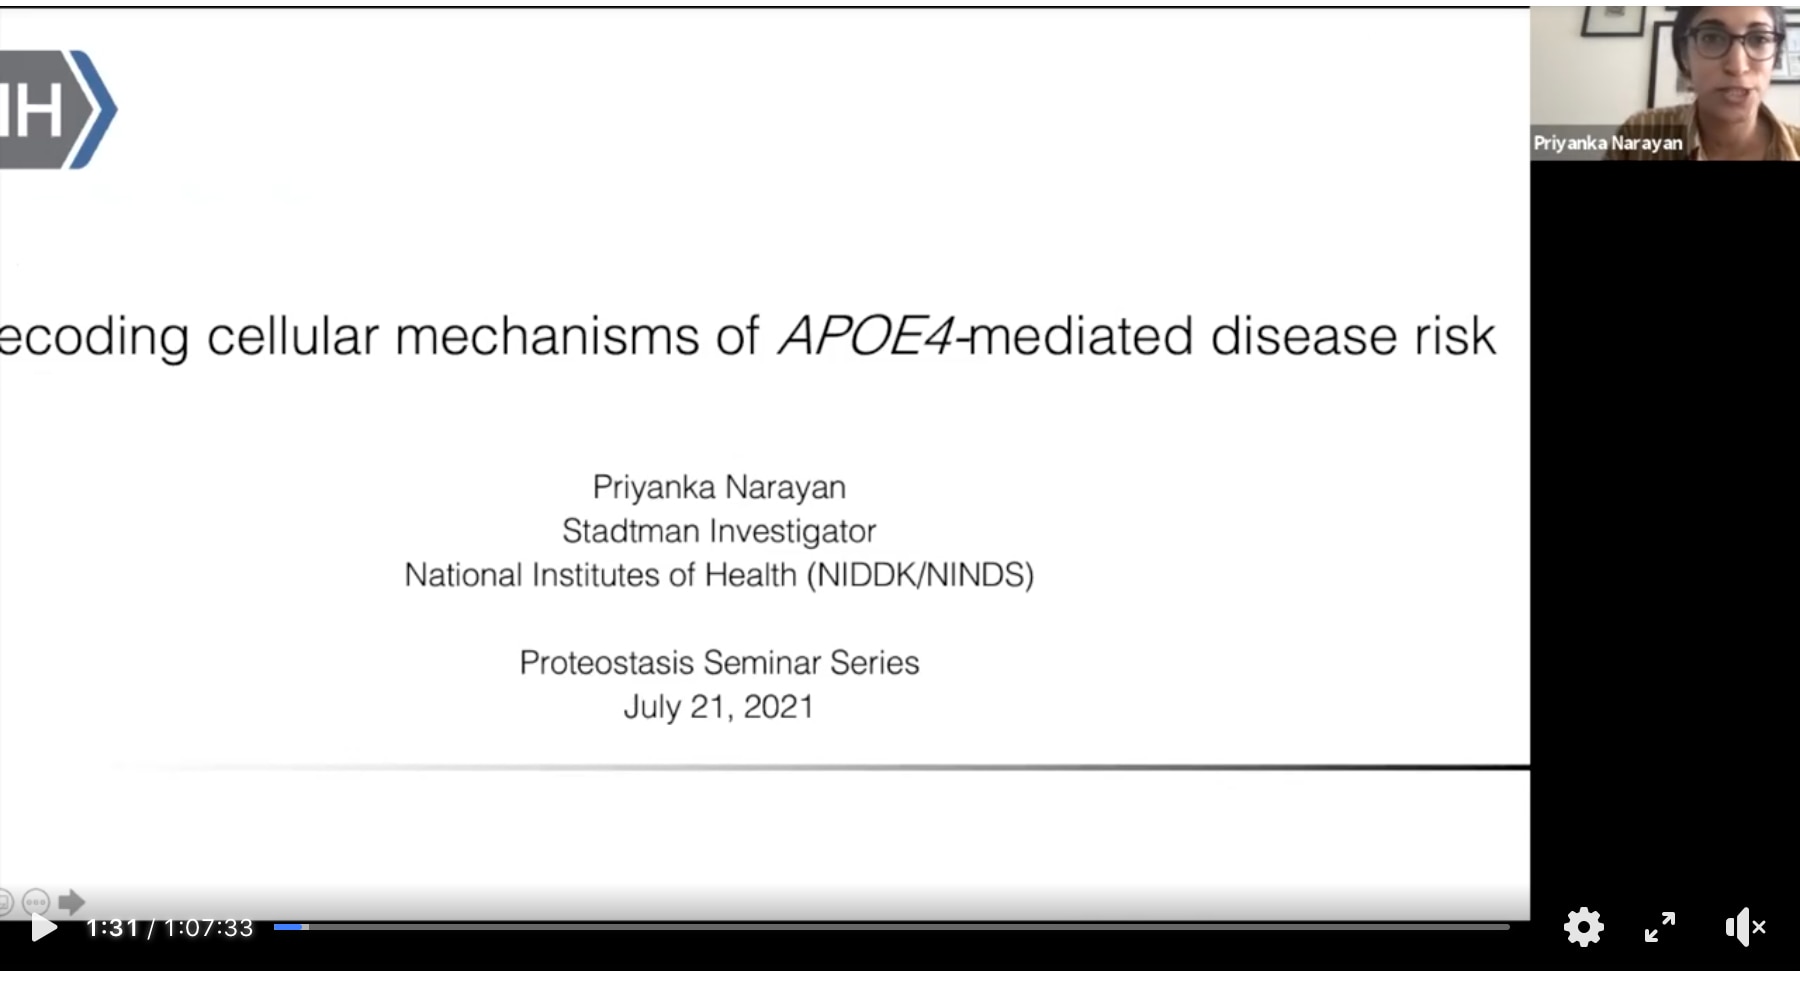 Screenshot of opening slide of seminar on APOE4-associated cellular pathologies.